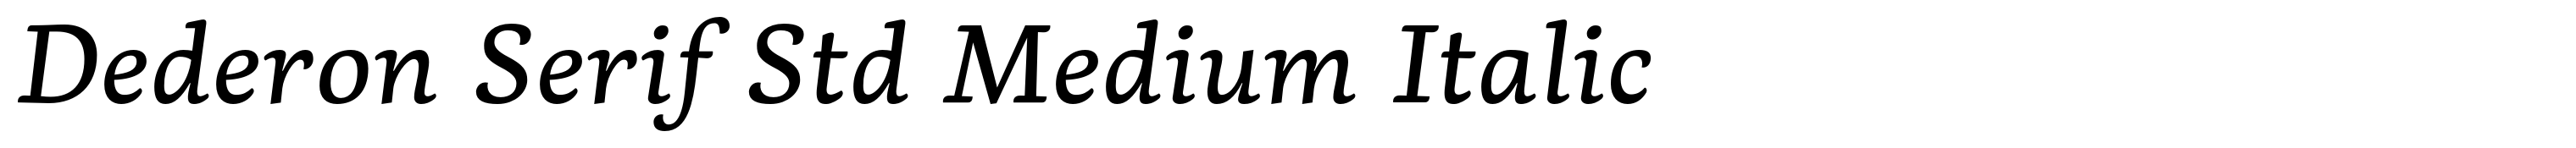 Dederon Serif Std Medium Italic